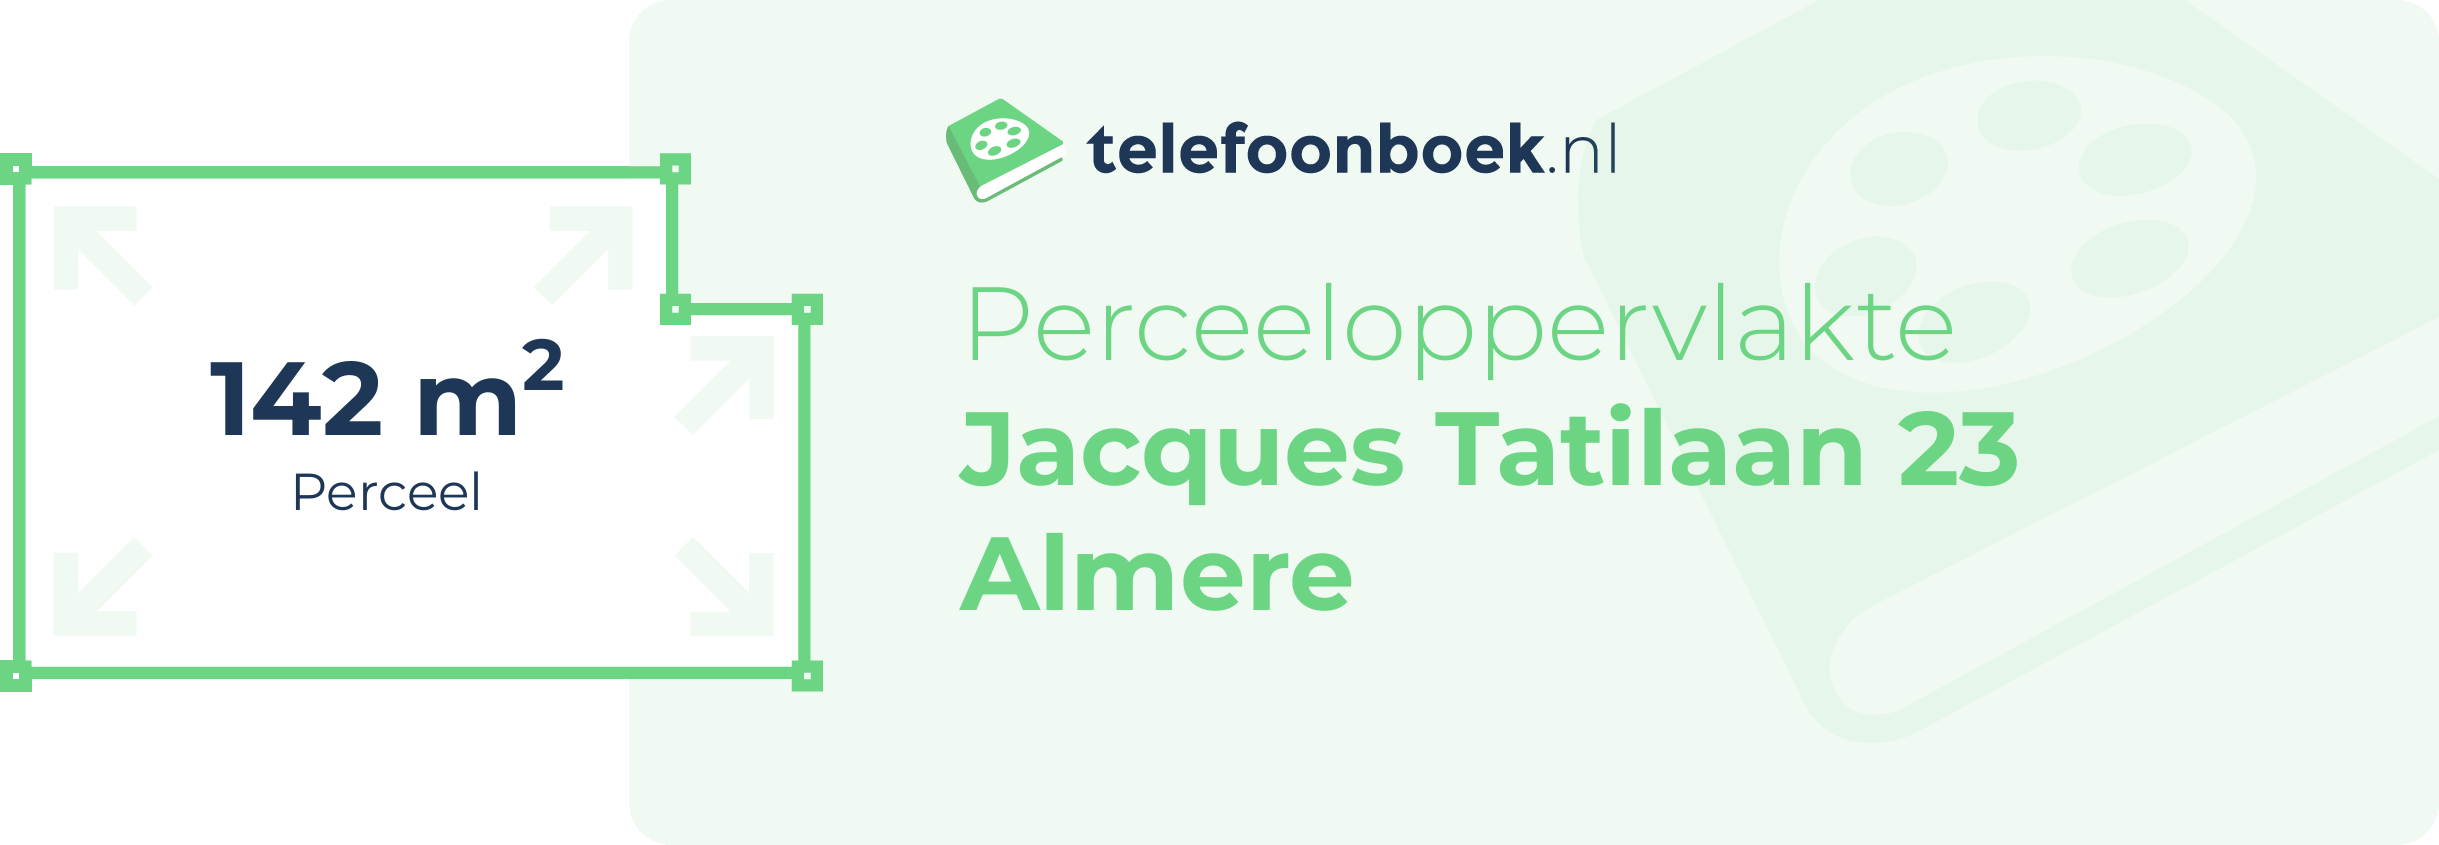 Perceeloppervlakte Jacques Tatilaan 23 Almere